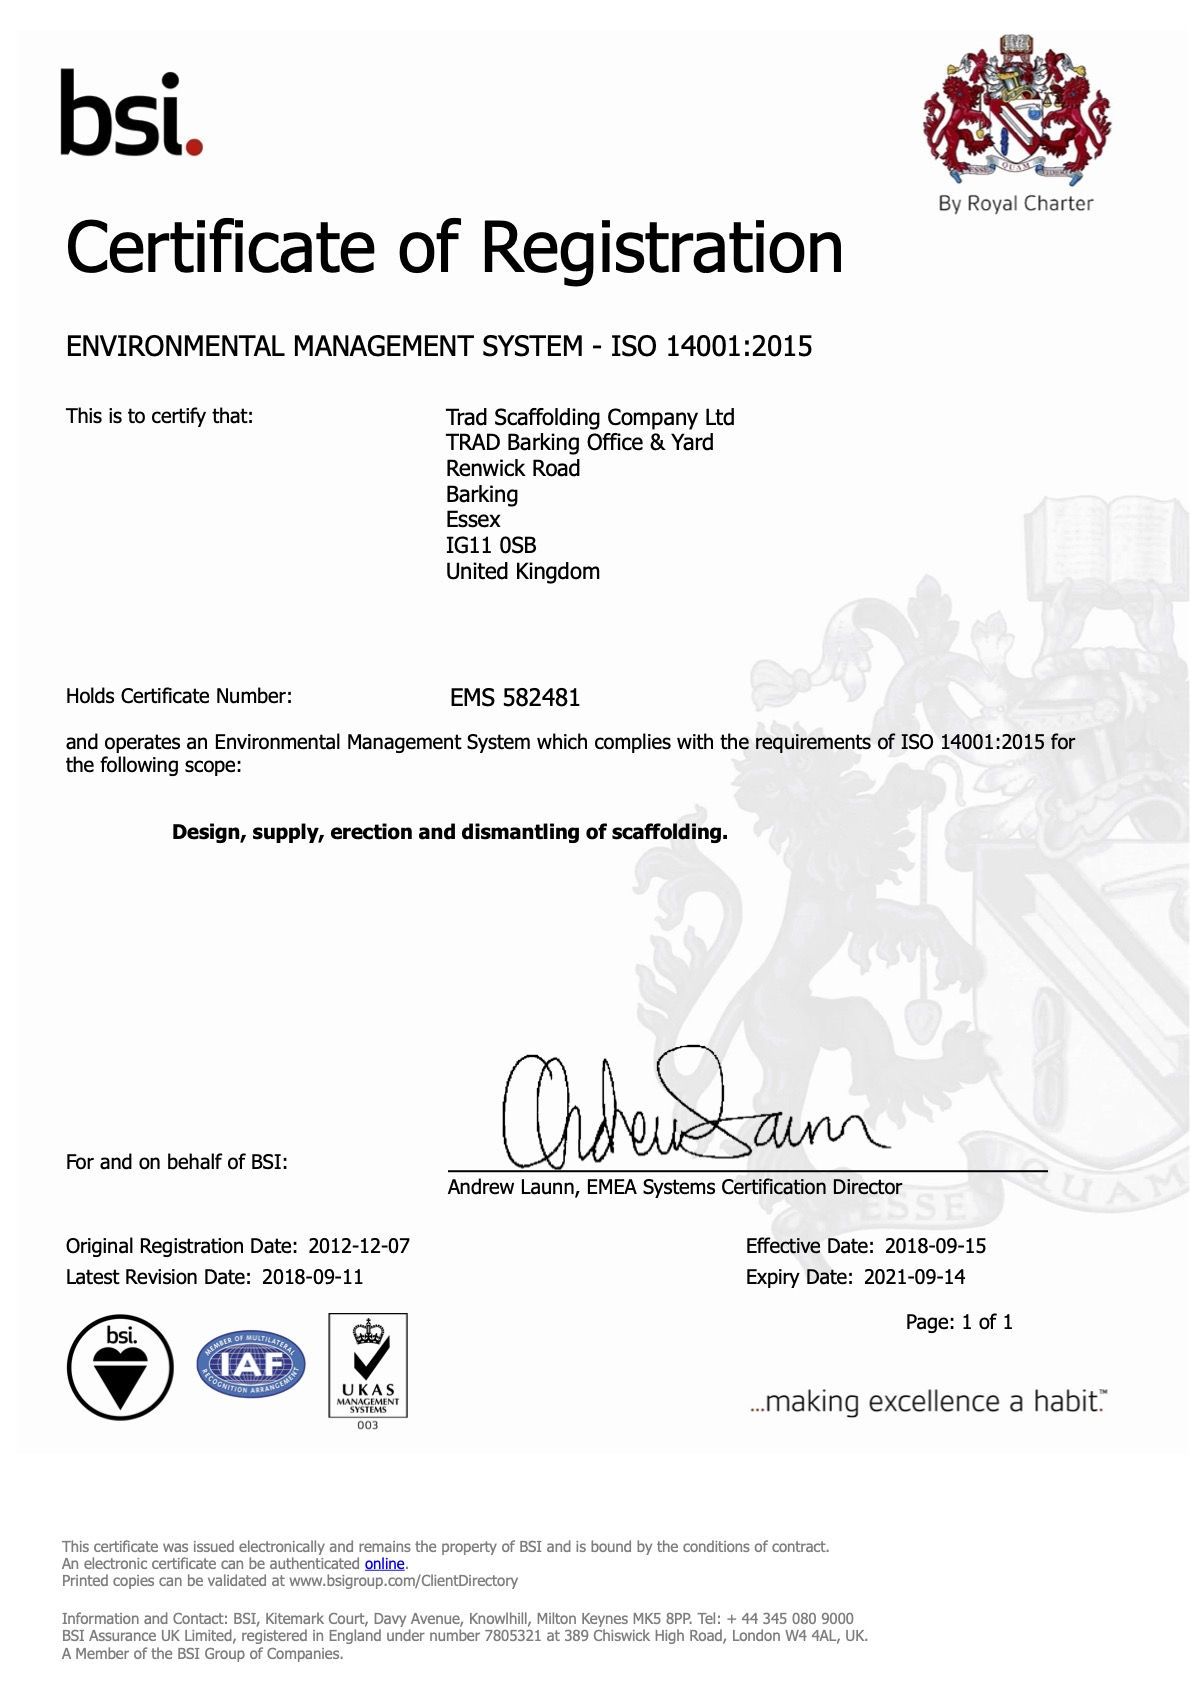 ISO 14001:2015 – ENVIRONMENTAL MANAGEMENT